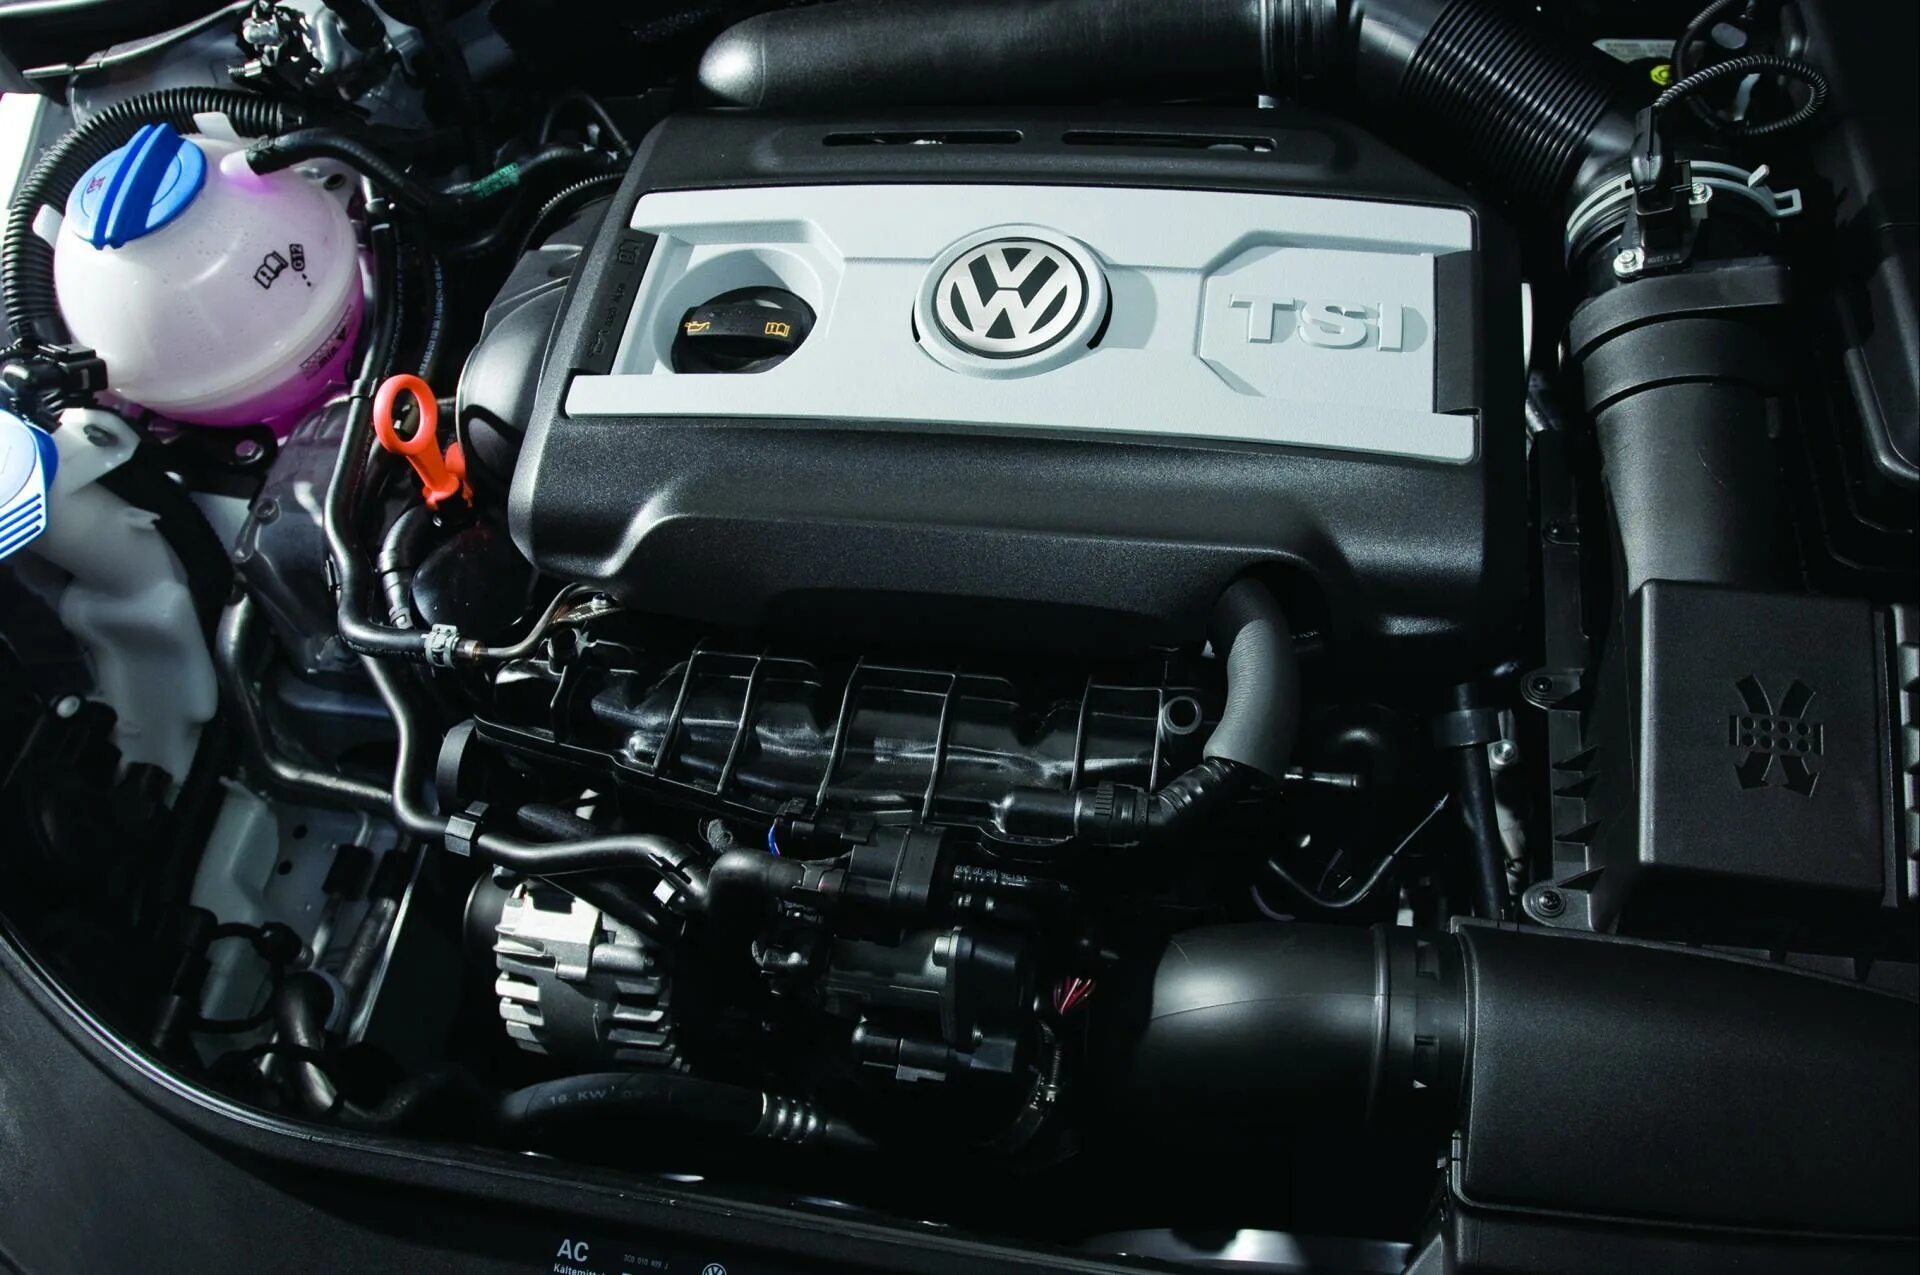 Volkswagen Passat cc TSI мотор. Двигатель Volkswagen Passat СС 2.0 TDI. Фольксваген б 6 1 и 4 турбо. Фольксваген Пассат 1.4 турбо. Двигатель на автомобиль volkswagen